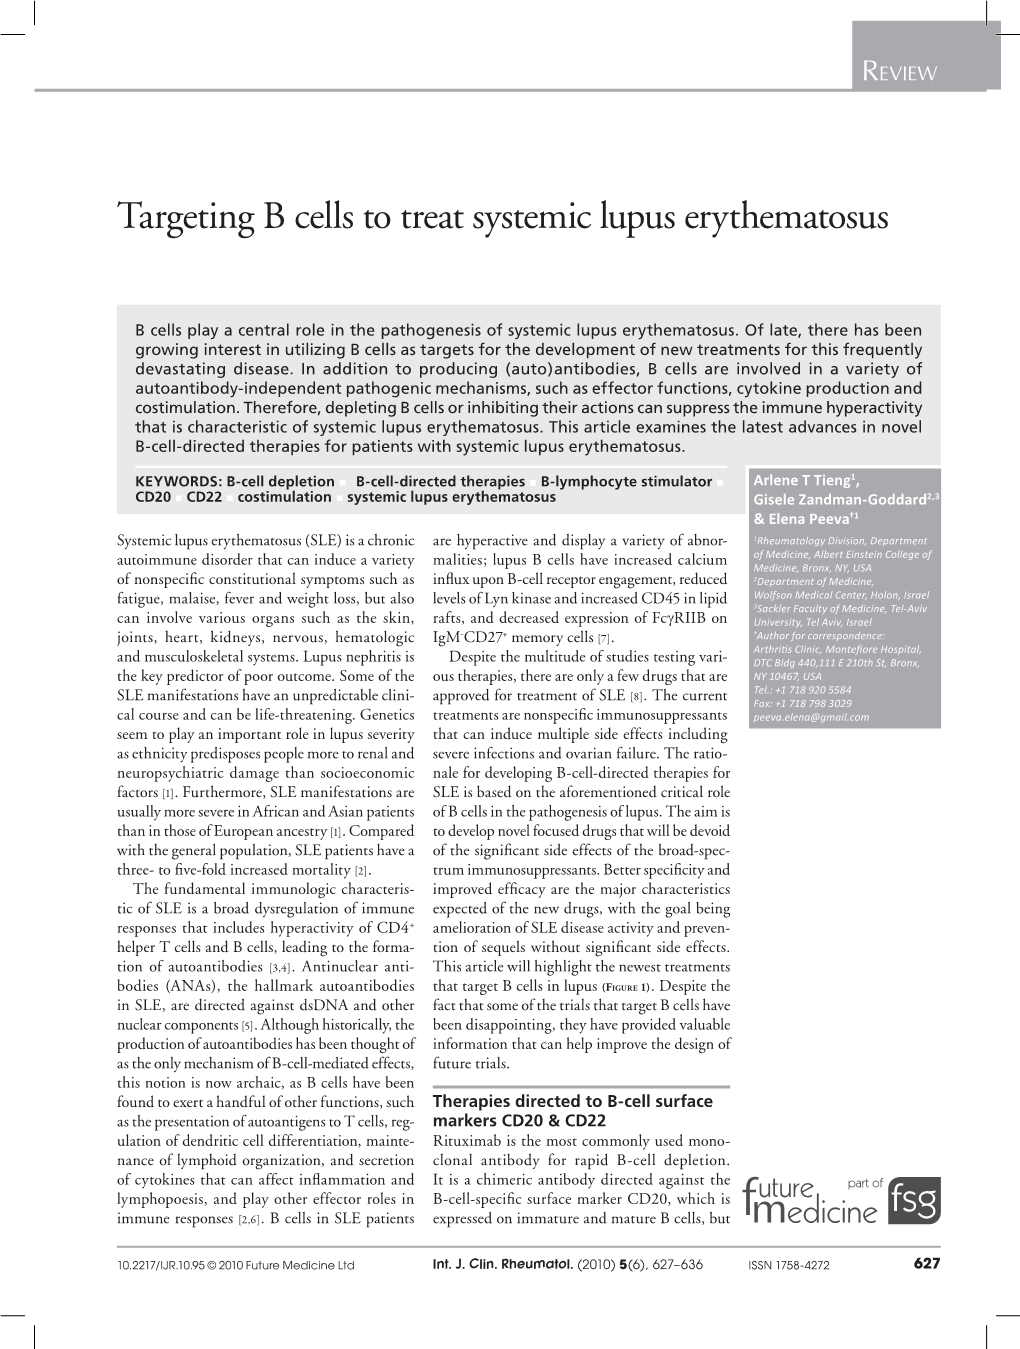 Targeting B Cells to Treat Systemic Lupus Erythematosus